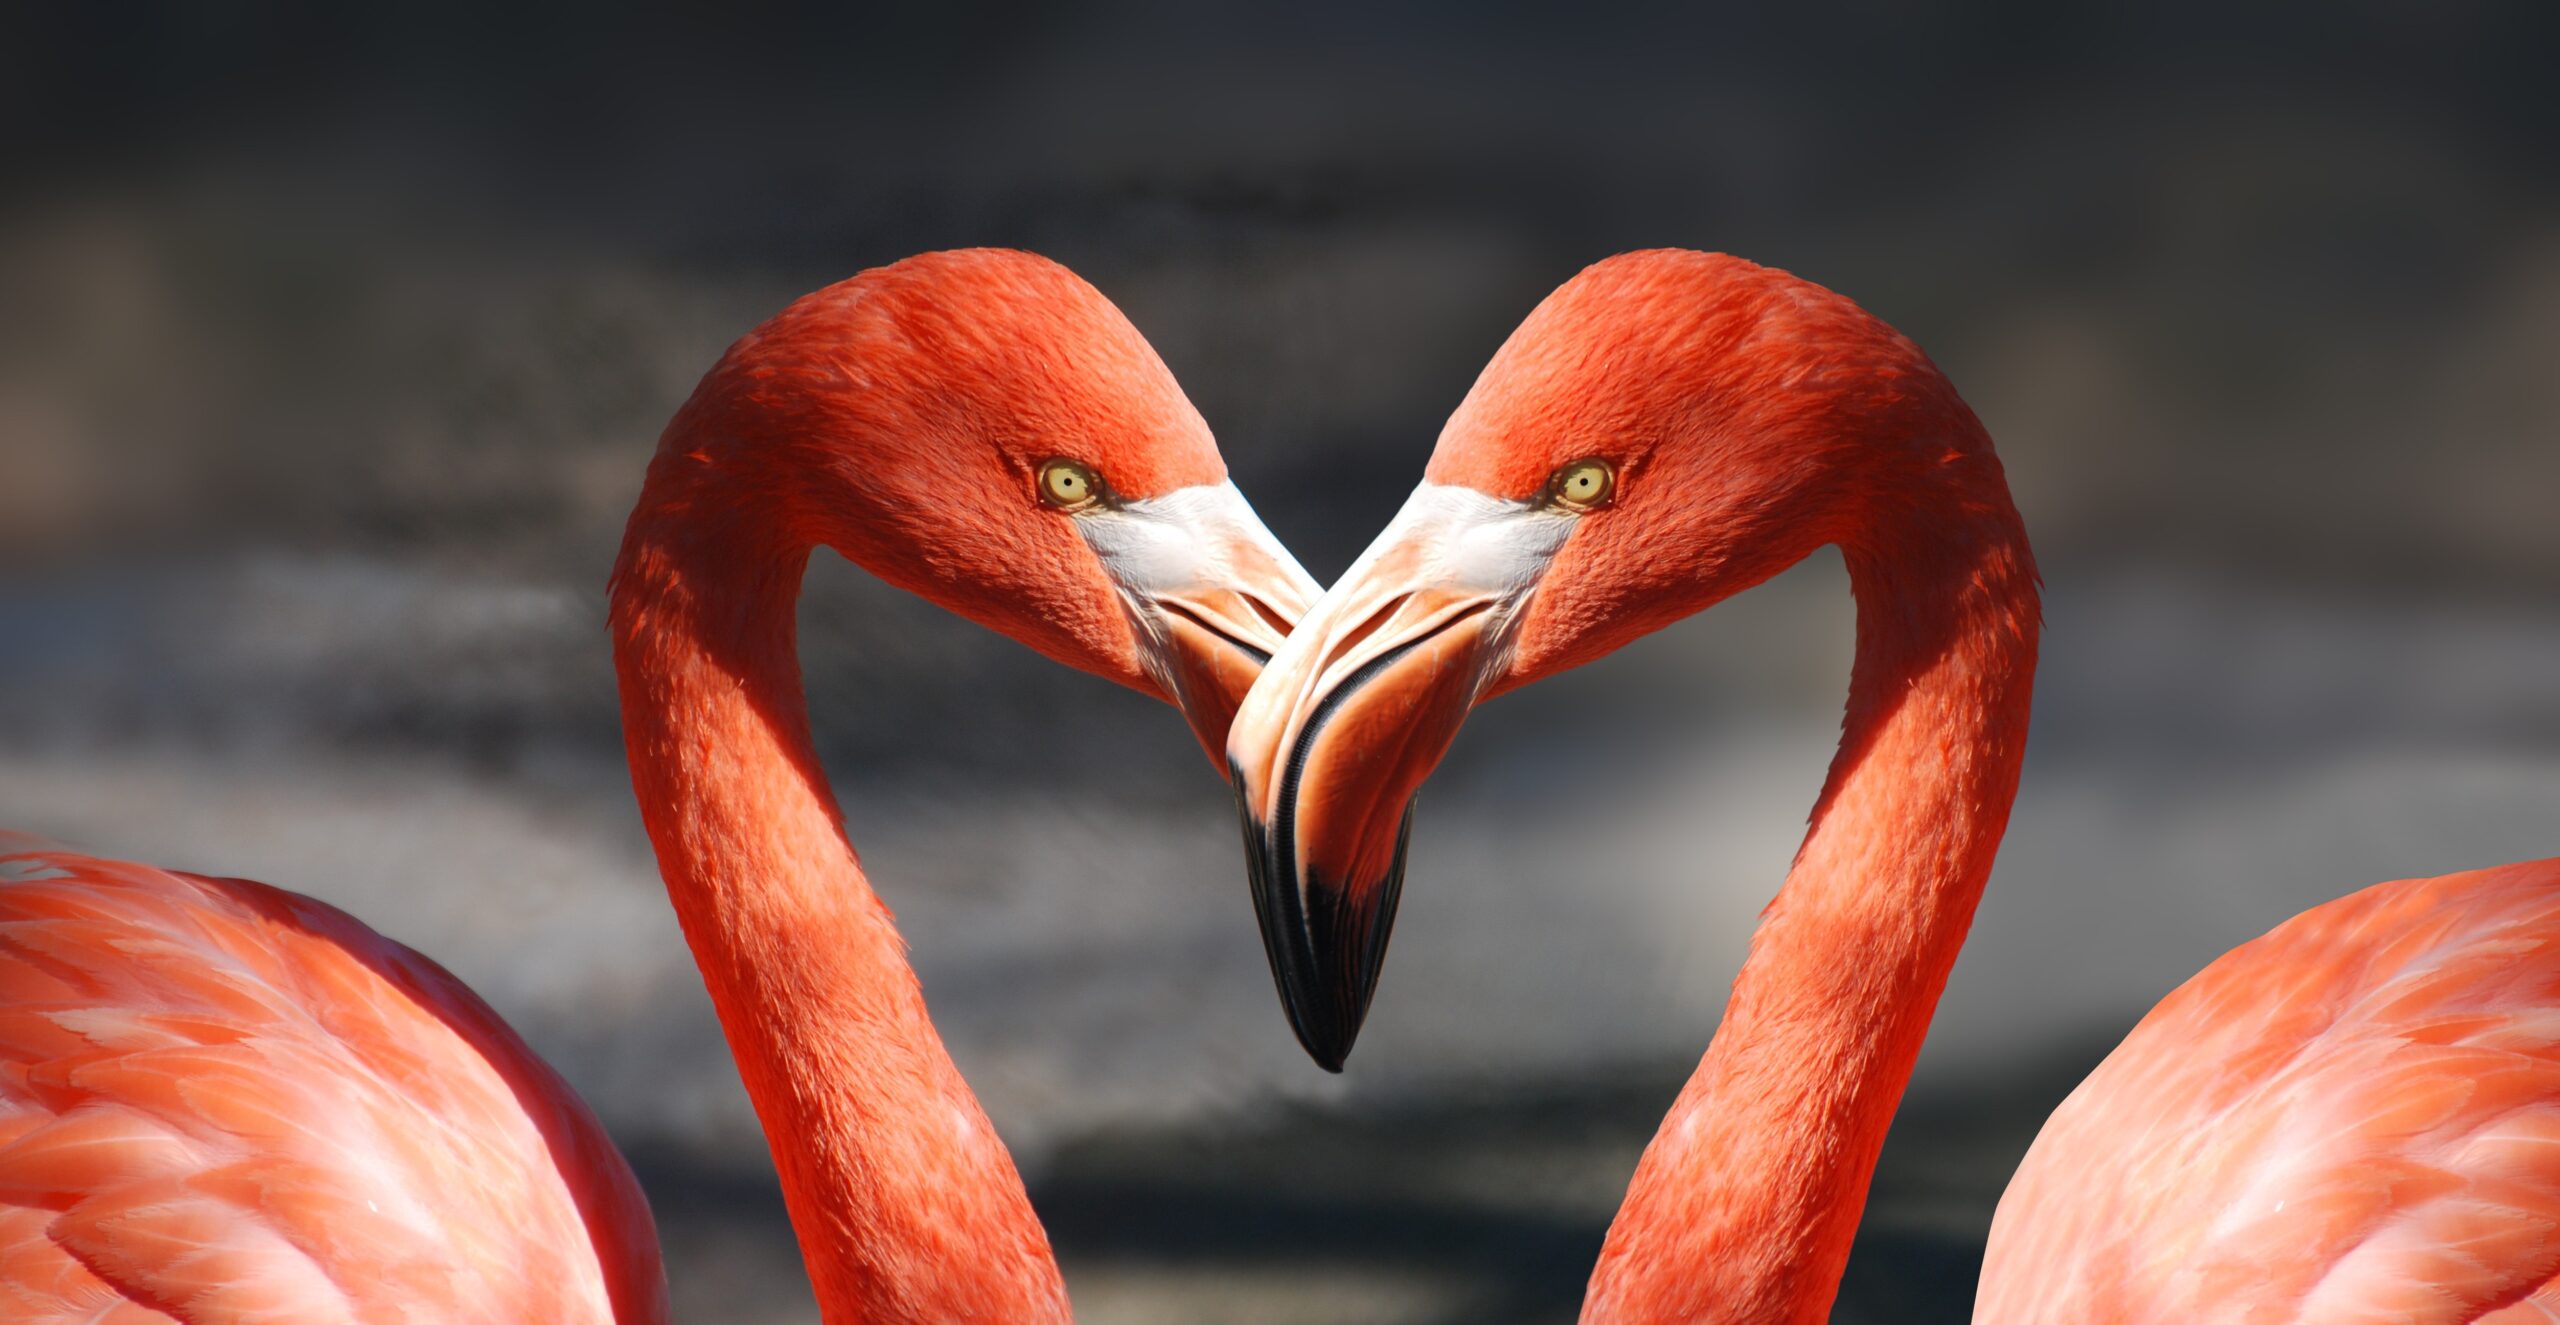 Flamingo: Deepmind's latest AI has better visual understanding